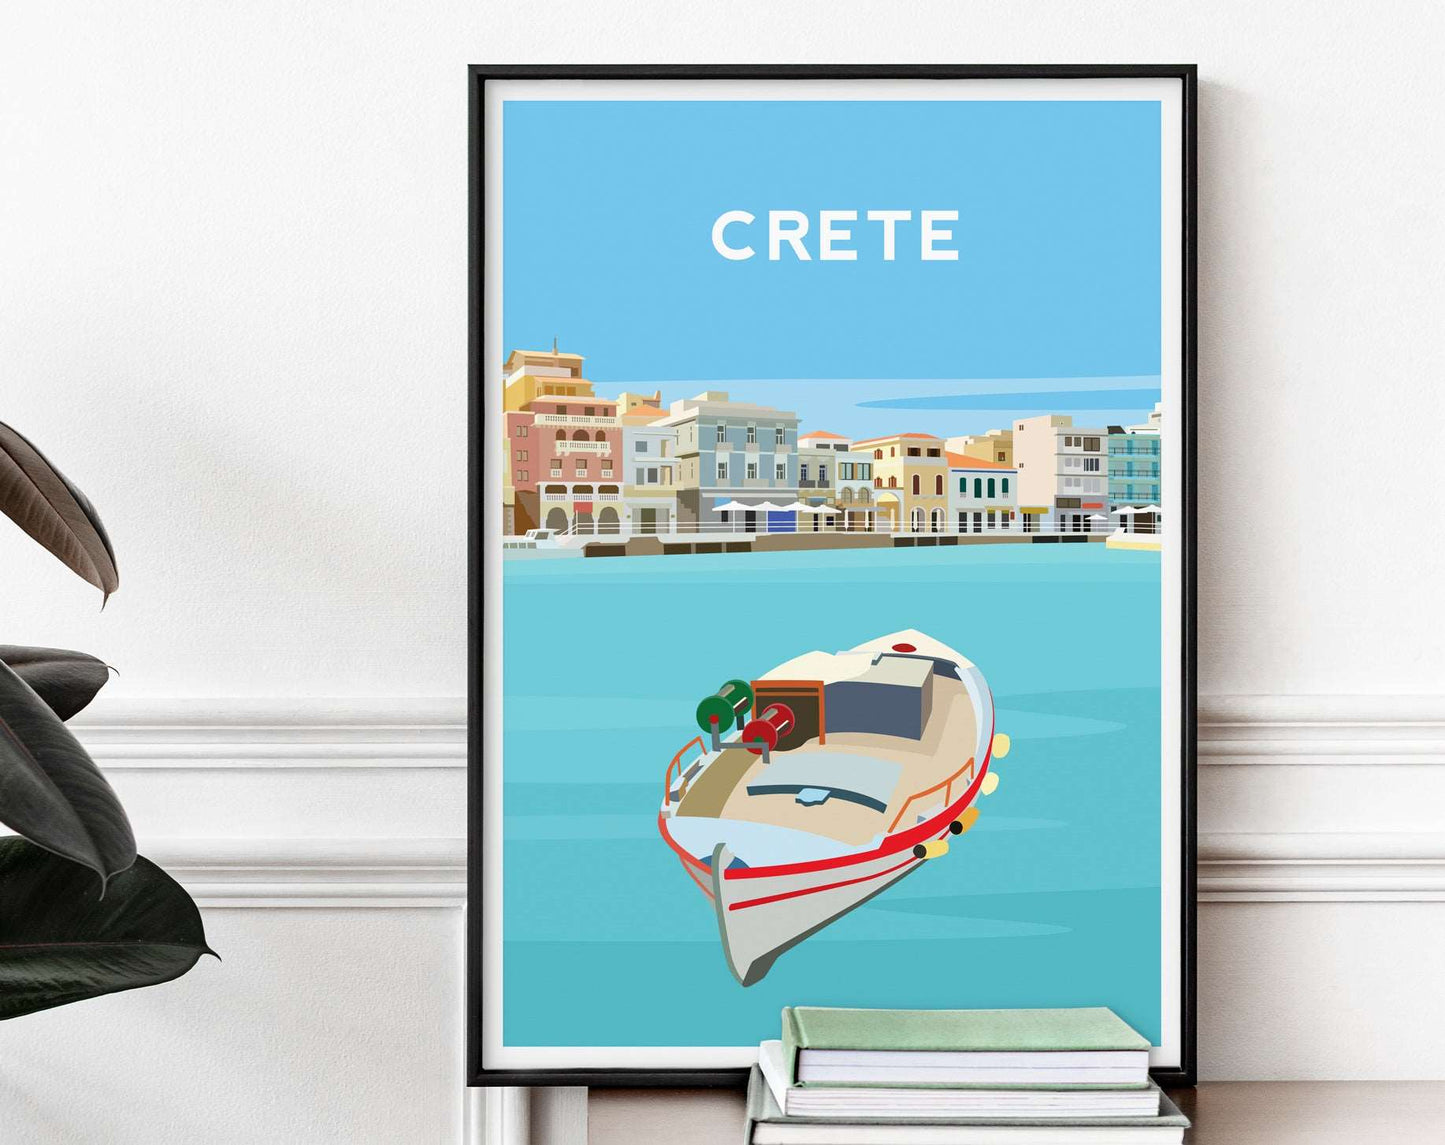 Set of 6 Greece Travel Prints, Greek Island Coastal Wall Art Typelab